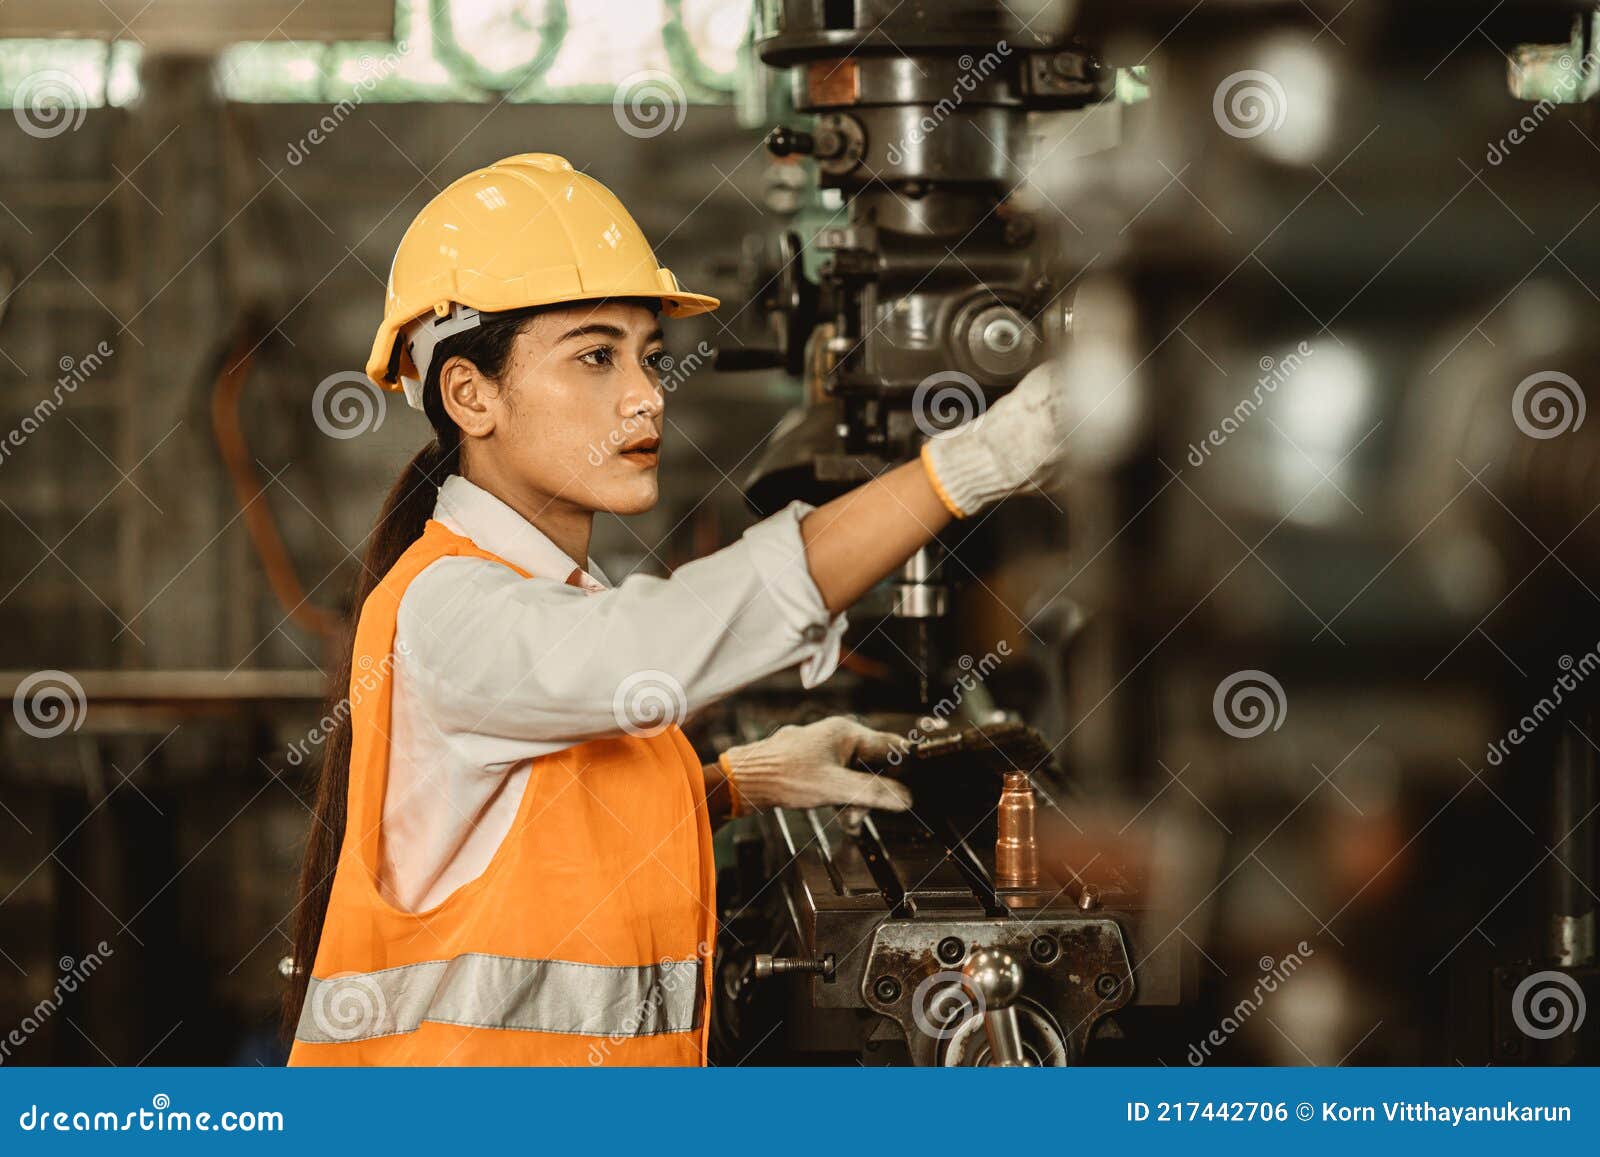 young female women attend worker happy working in metal factory workplace work engineer fix maintenance heavy industry machine